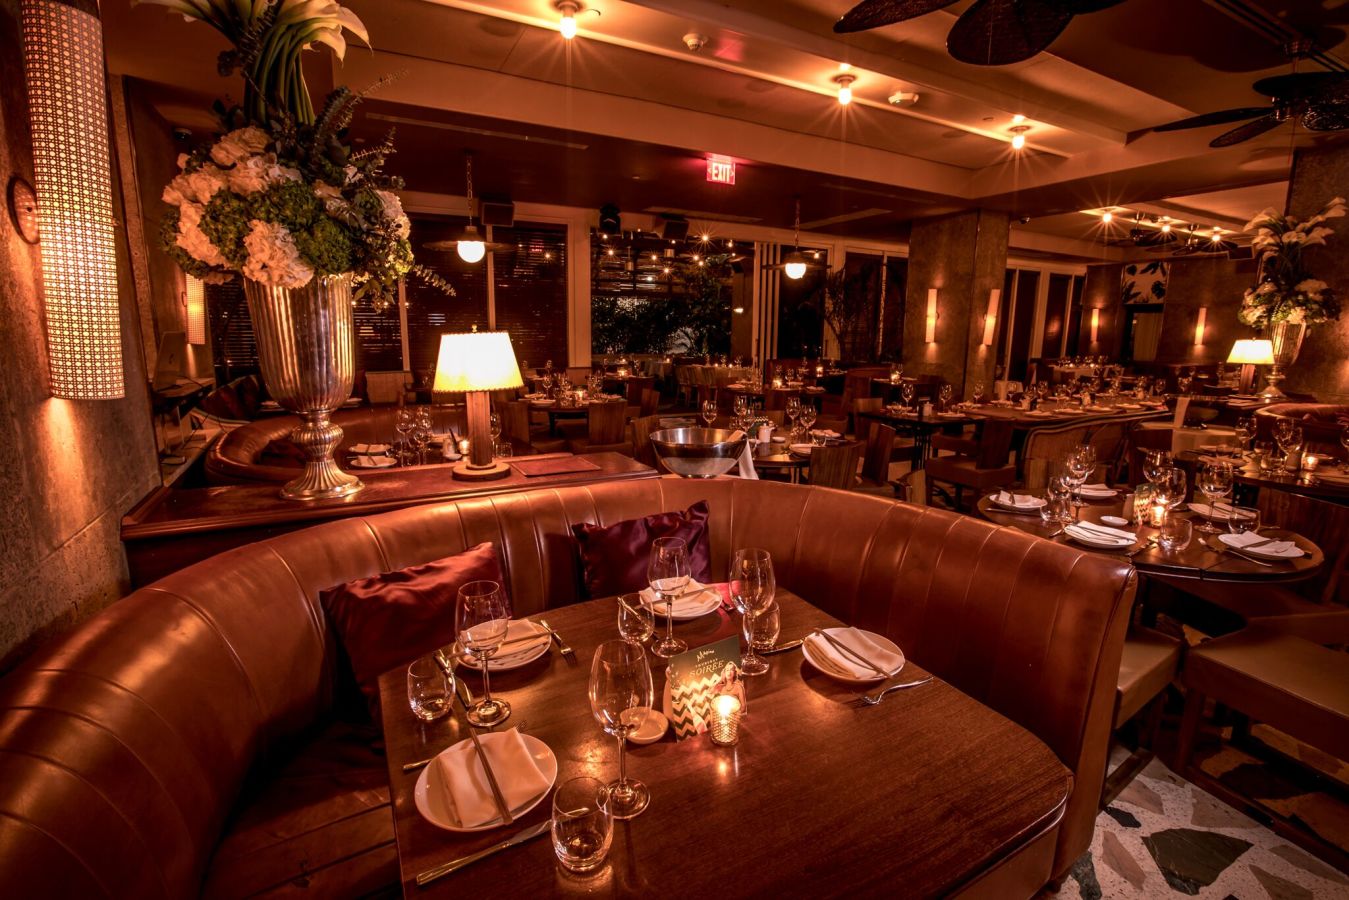 Miami marion restaurant epicurean affair dose via travel brickell eater cities stunning across america